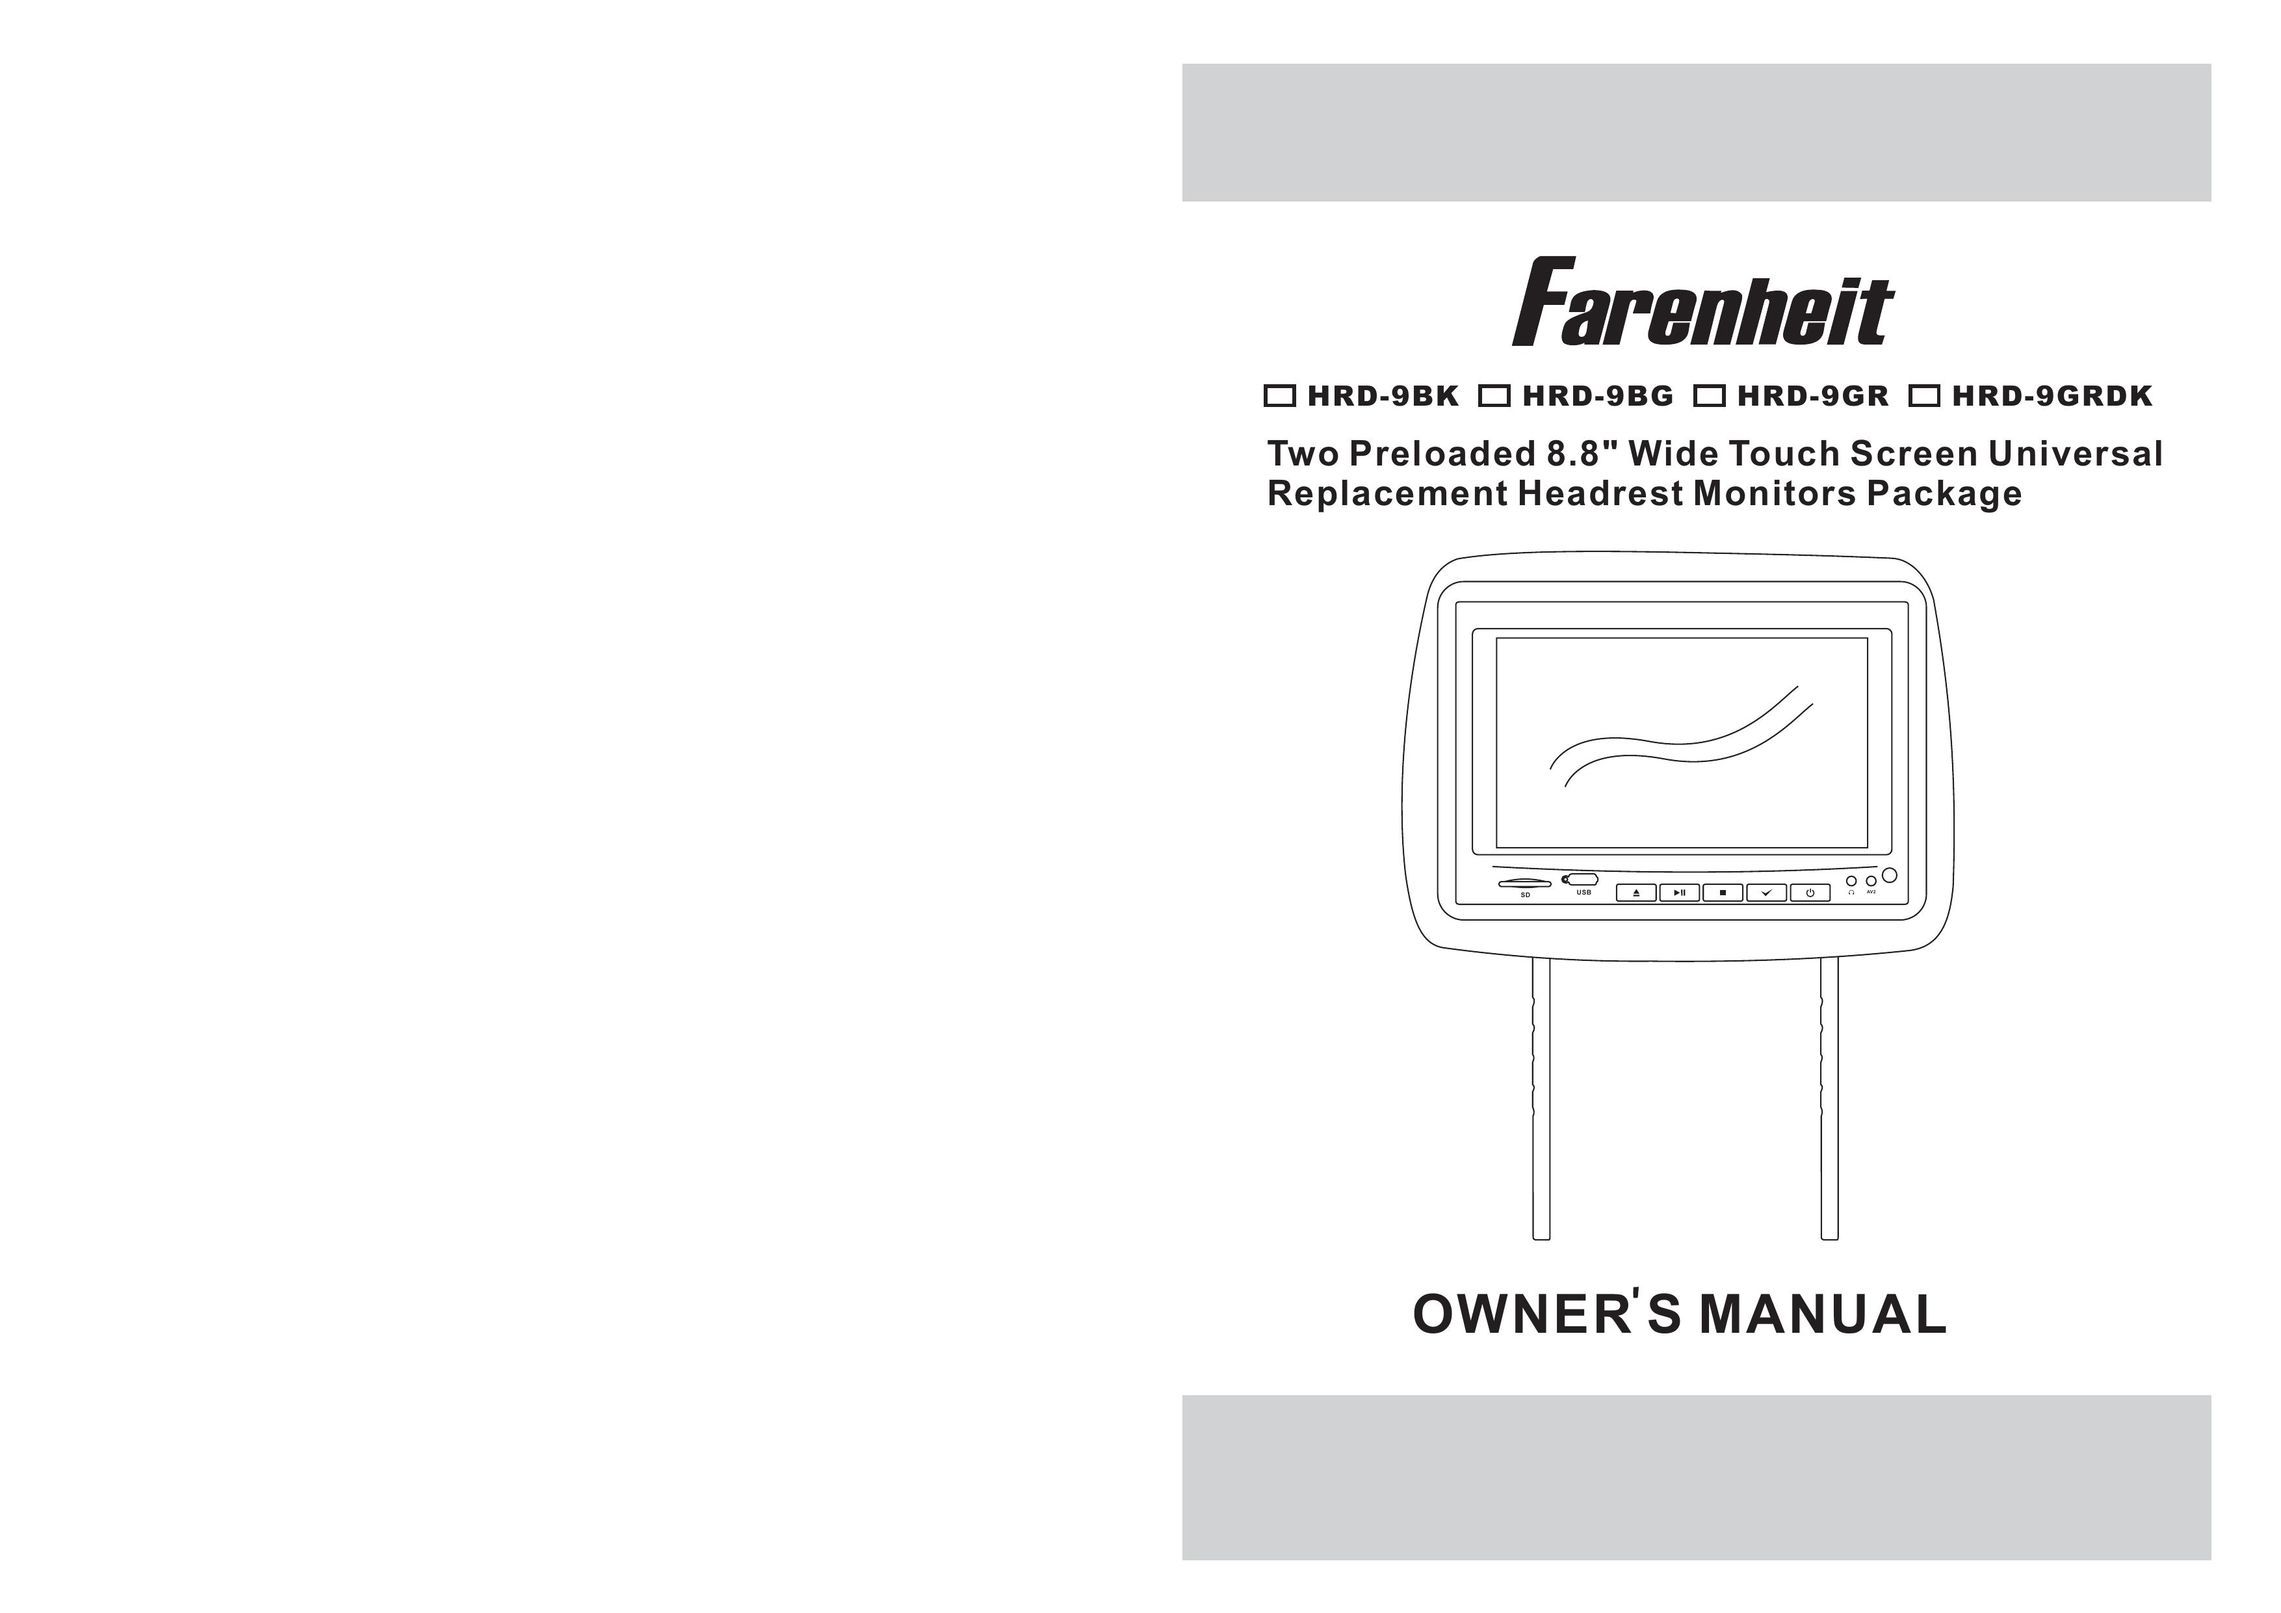 Farenheit Technologies HRD-9GRDK Car Video System User Manual